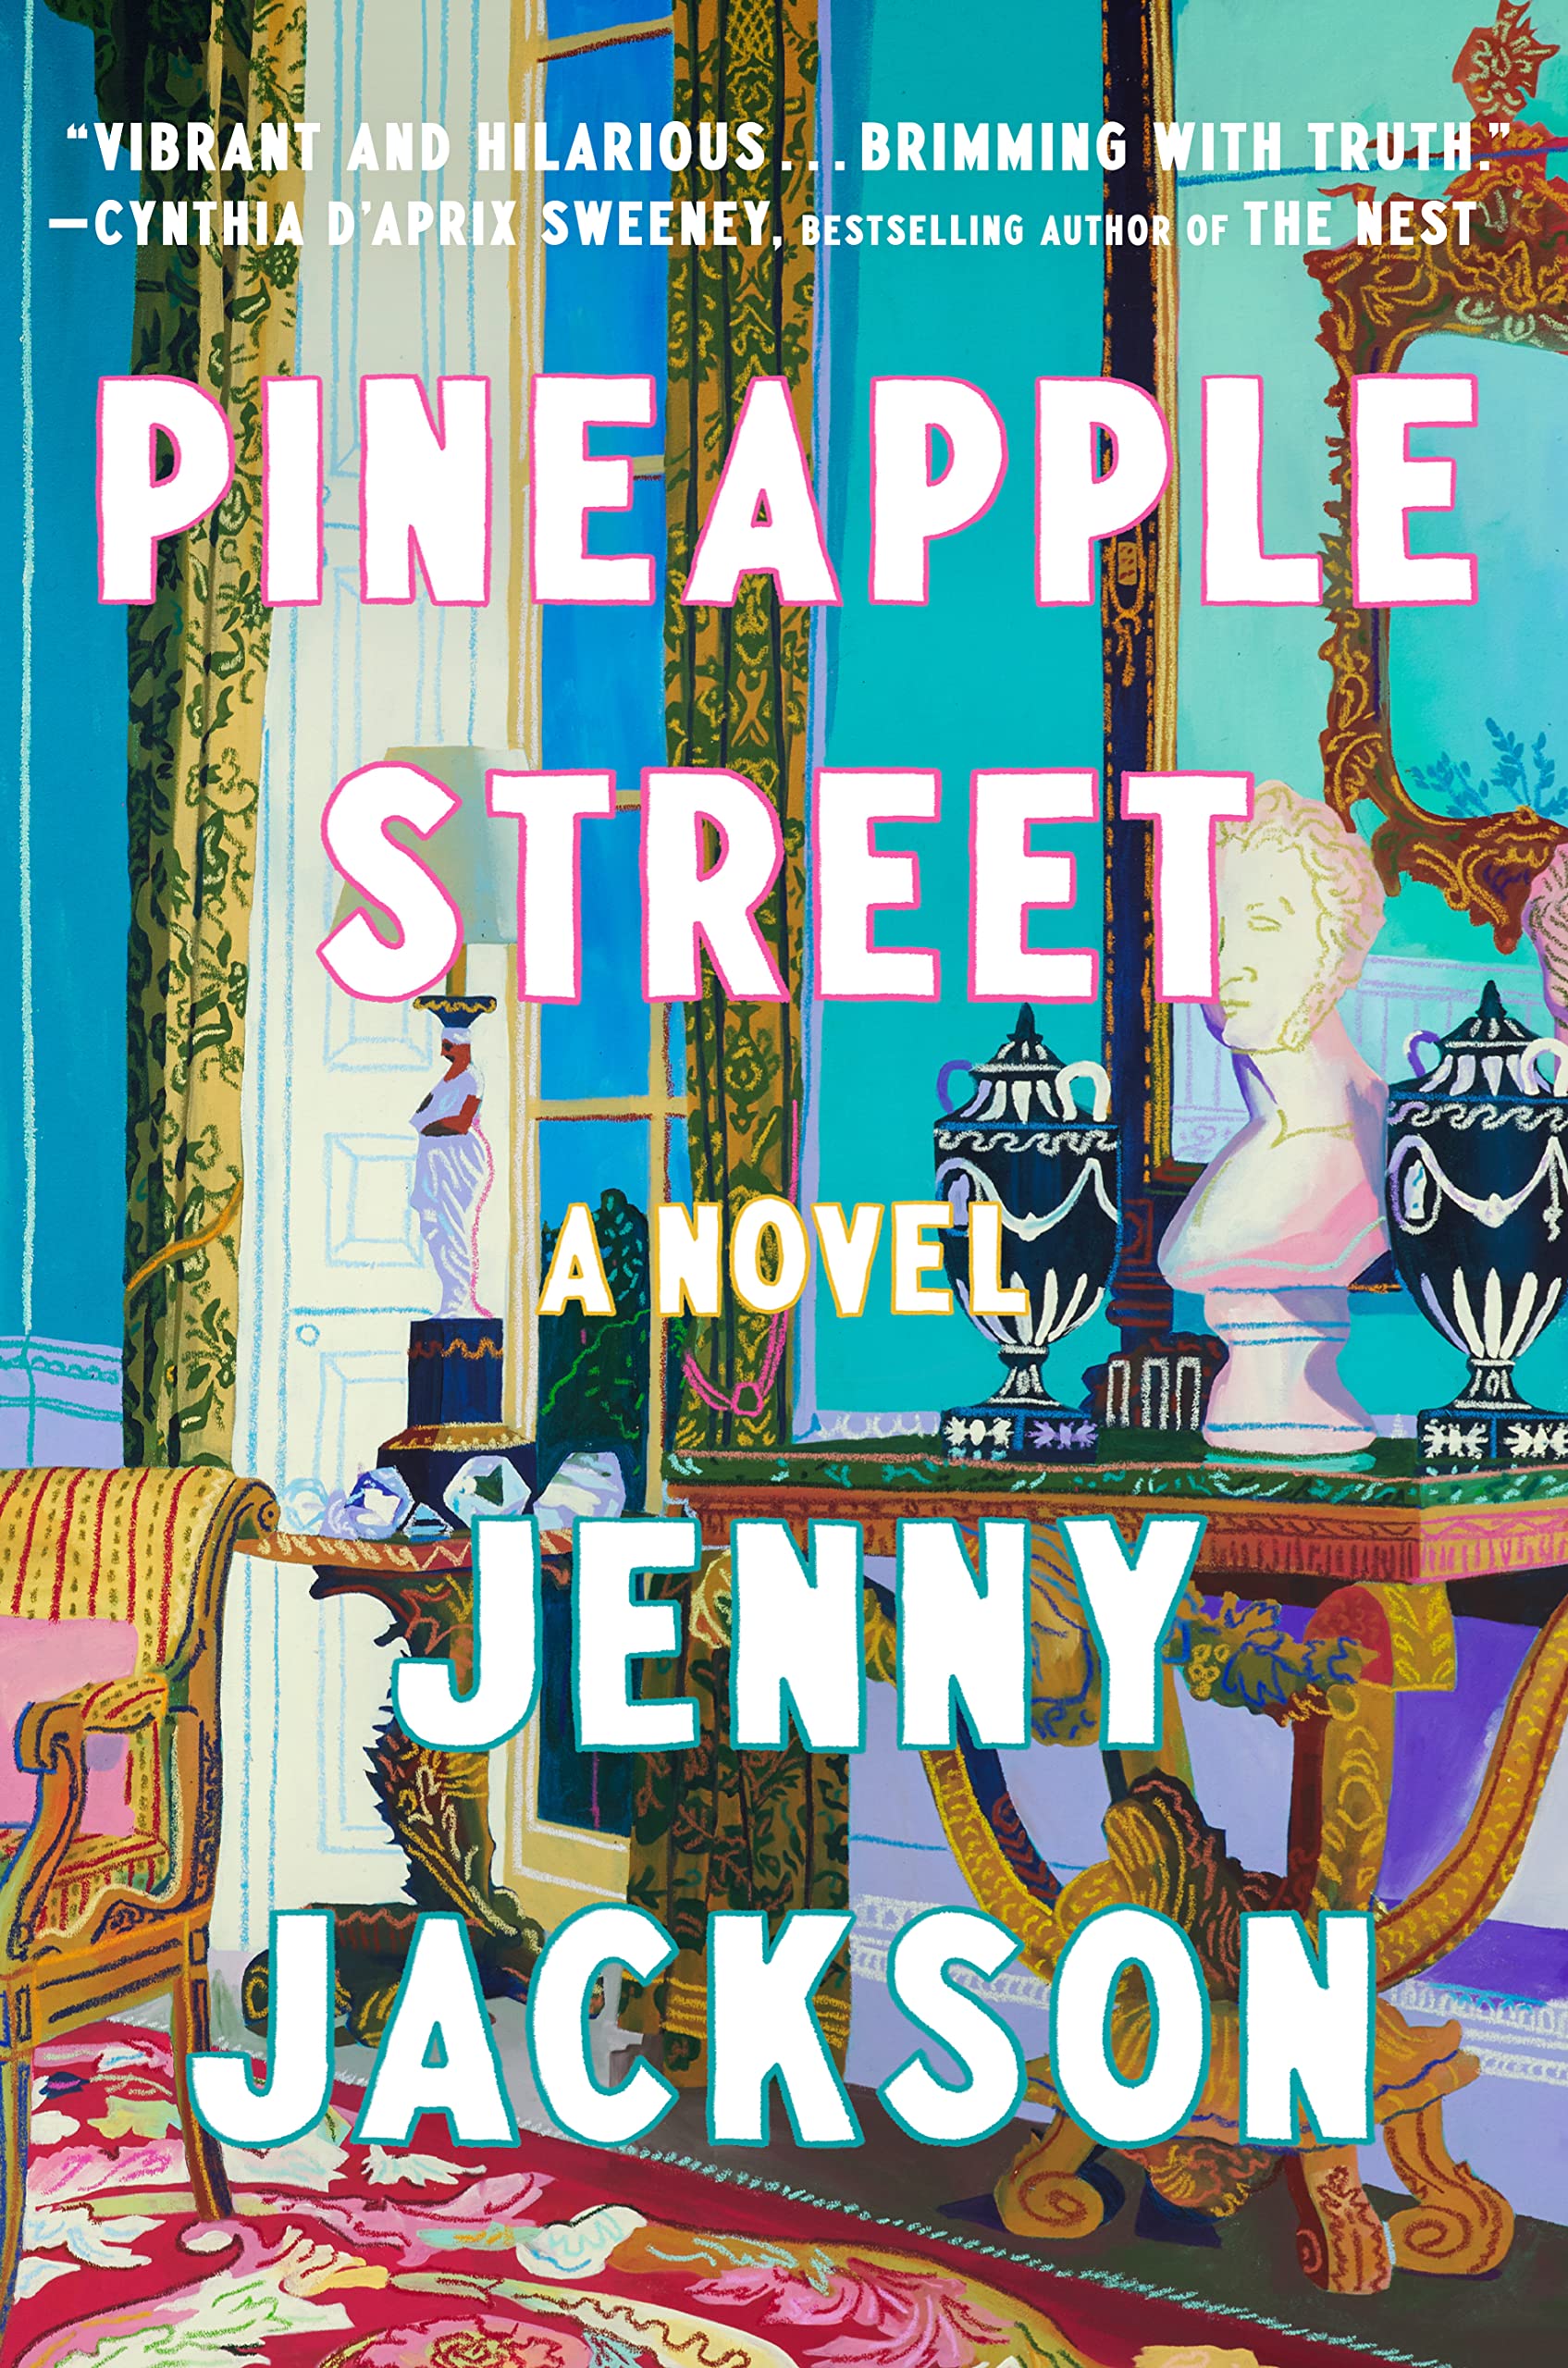 Image for "Pineapple Street"